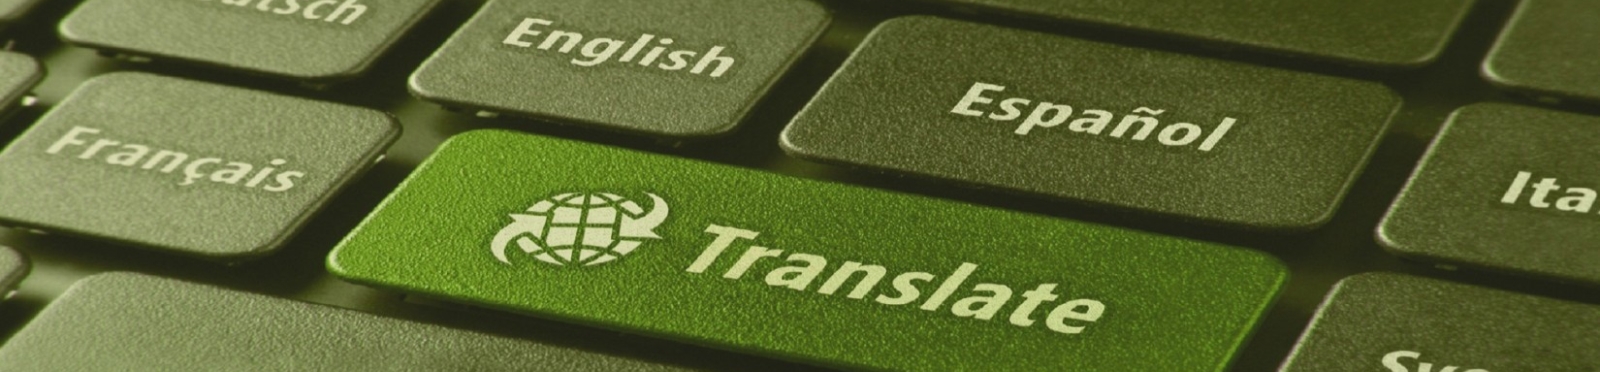 translation_keyboard